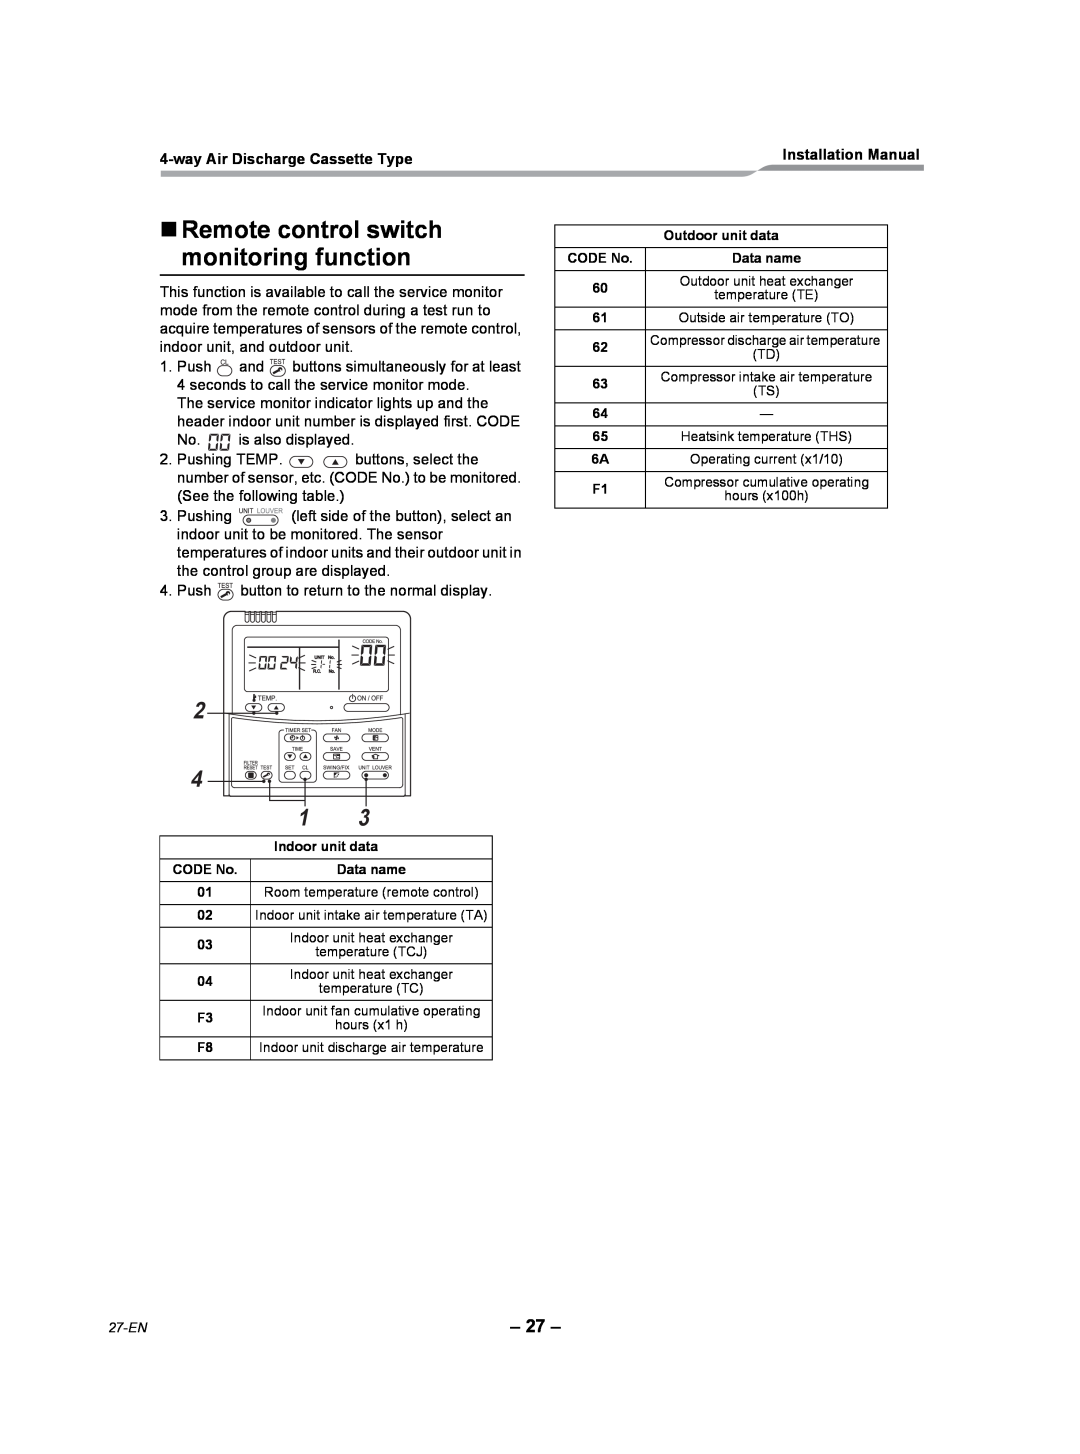 Toshiba RAV-SP180UT-UL „Remote control switch monitoring function, wayAir Discharge Cassette Type, Installation Manual 